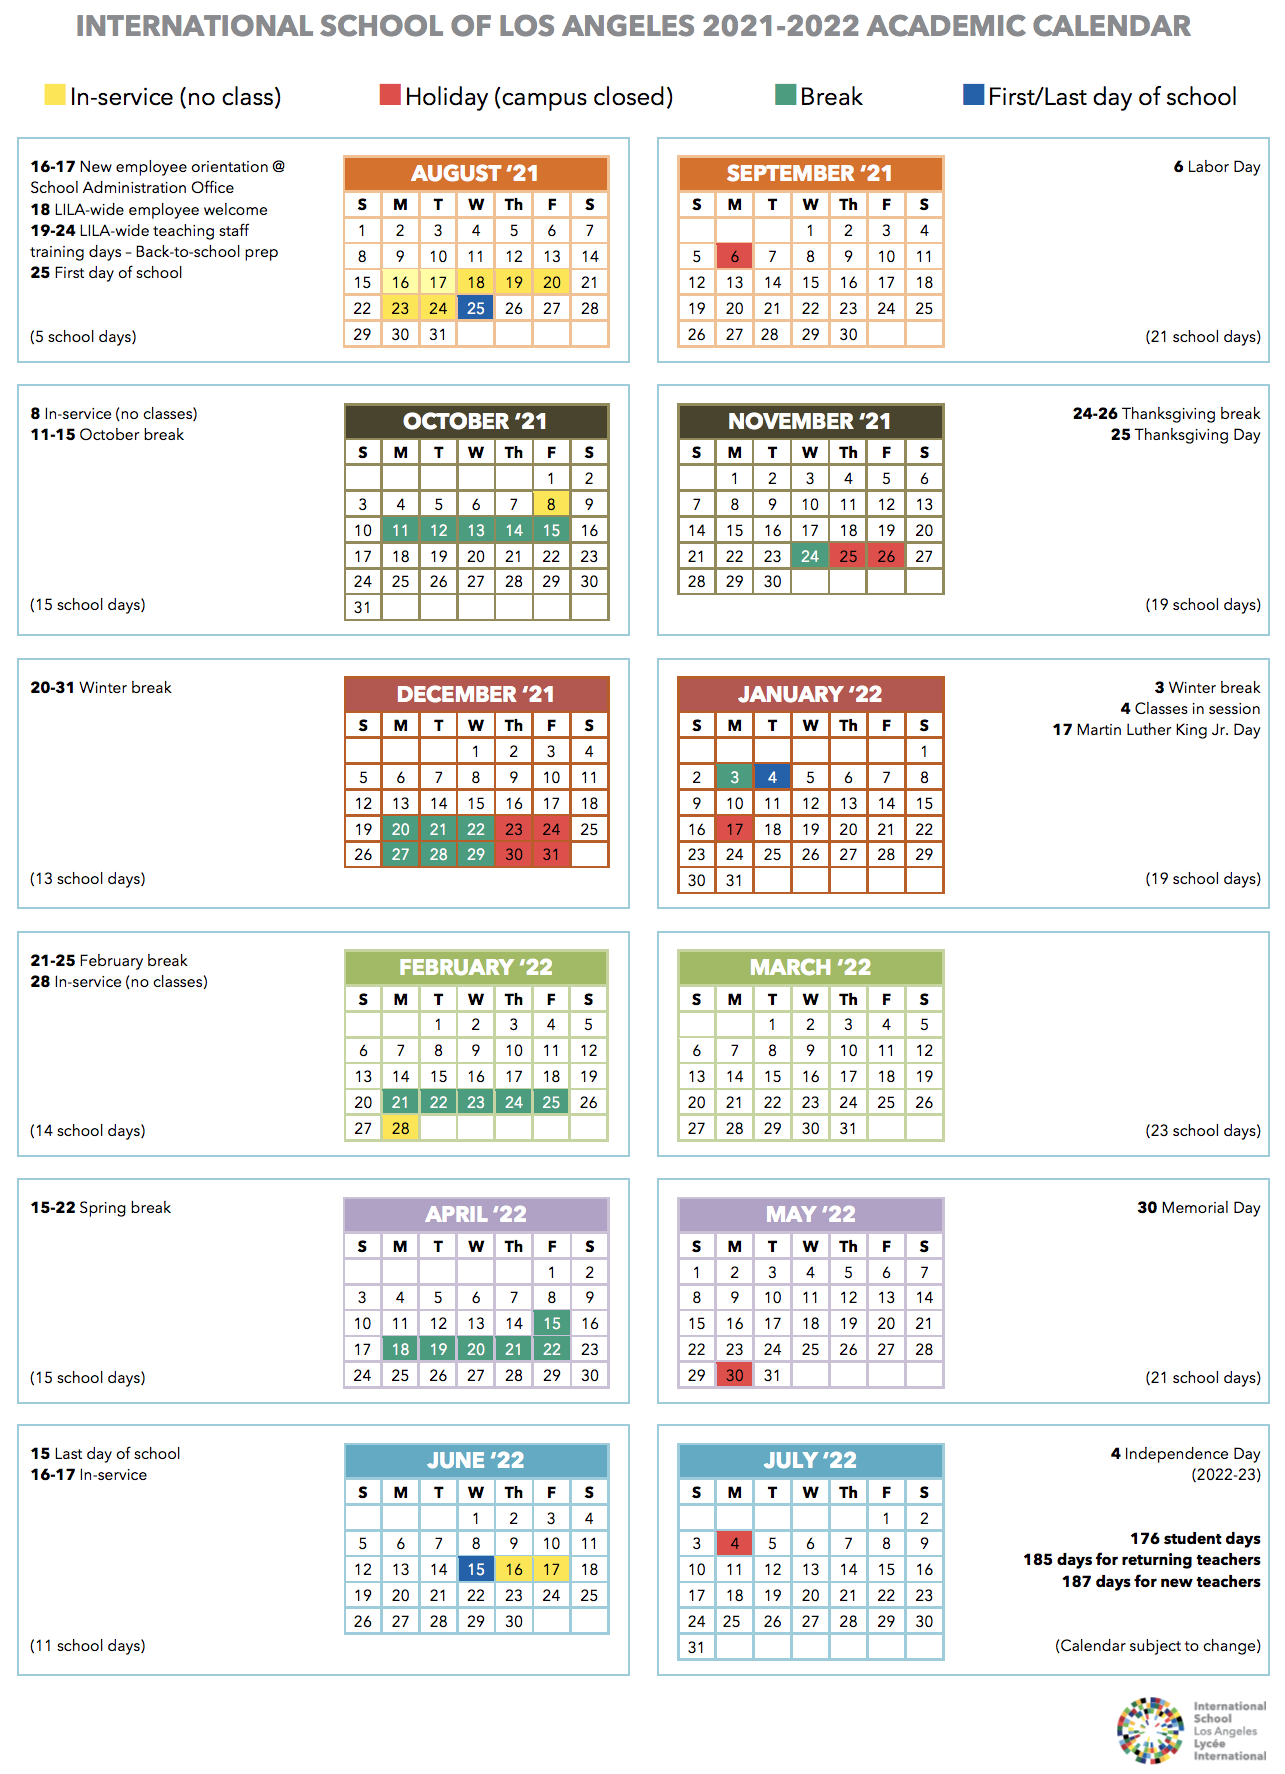 Gettysburg College Academic Calendar 2022 23 Calendar | International School Of Los Angeles